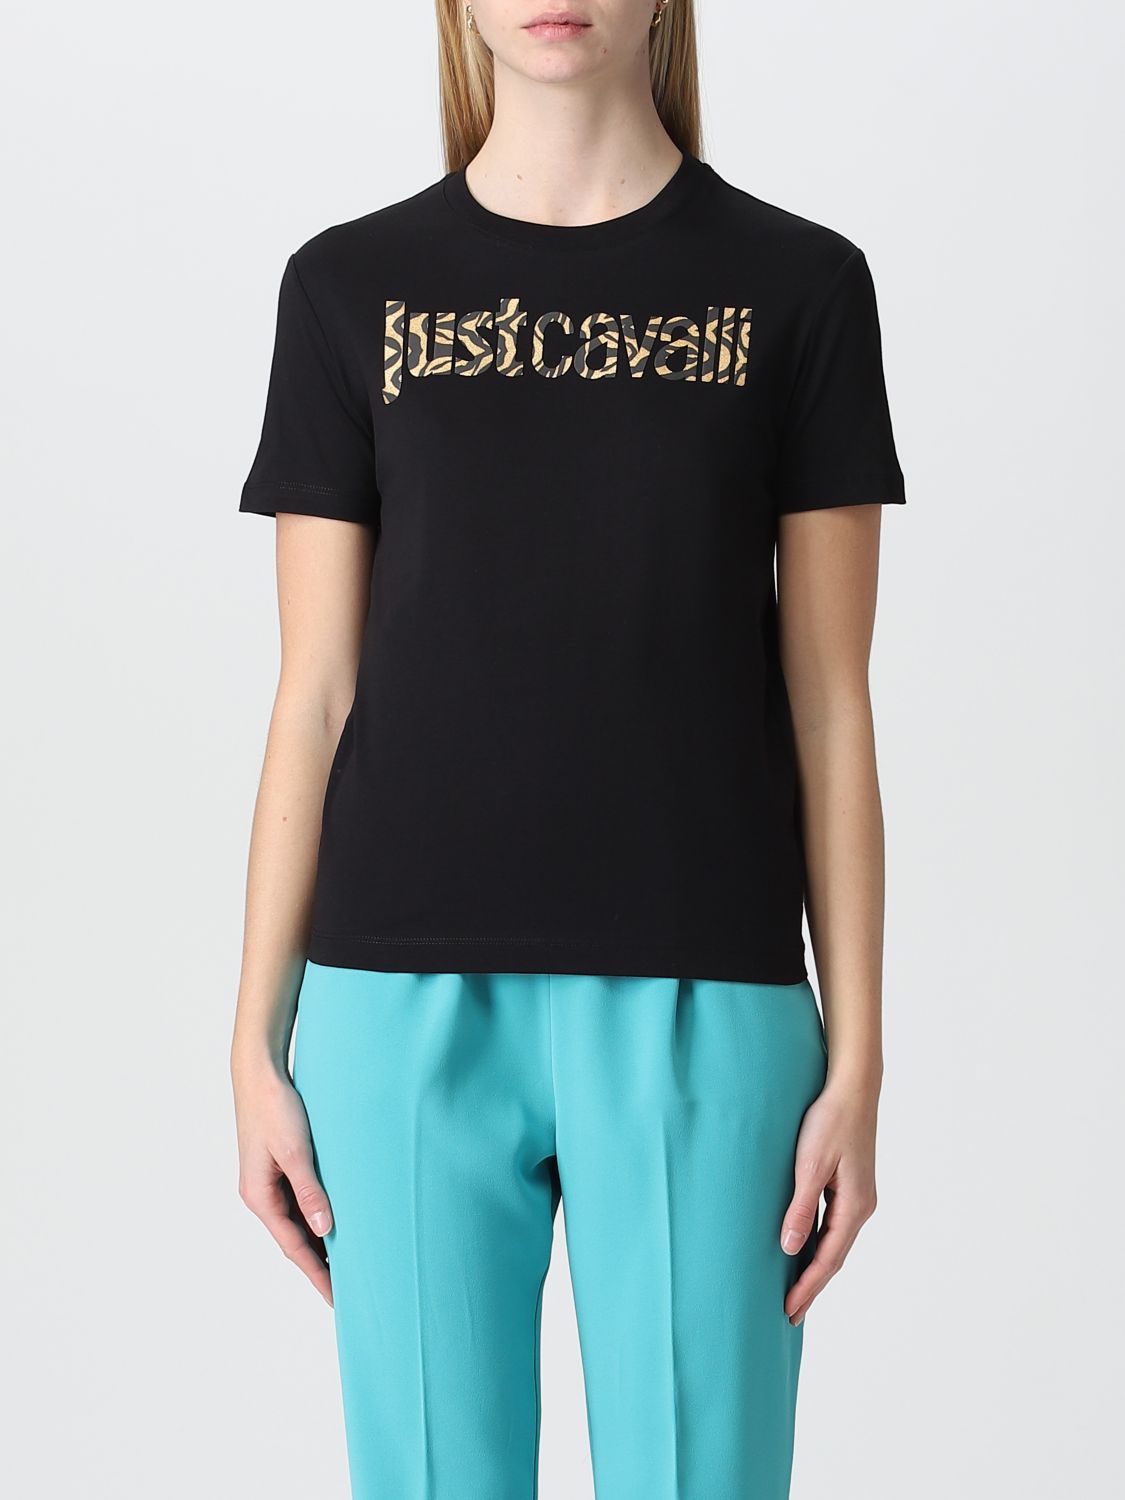 dans Zwijgend vloot JUST CAVALLI: t-shirt for woman - Black | Just Cavalli t-shirt  74PBHG03CJ300 online on GIGLIO.COM